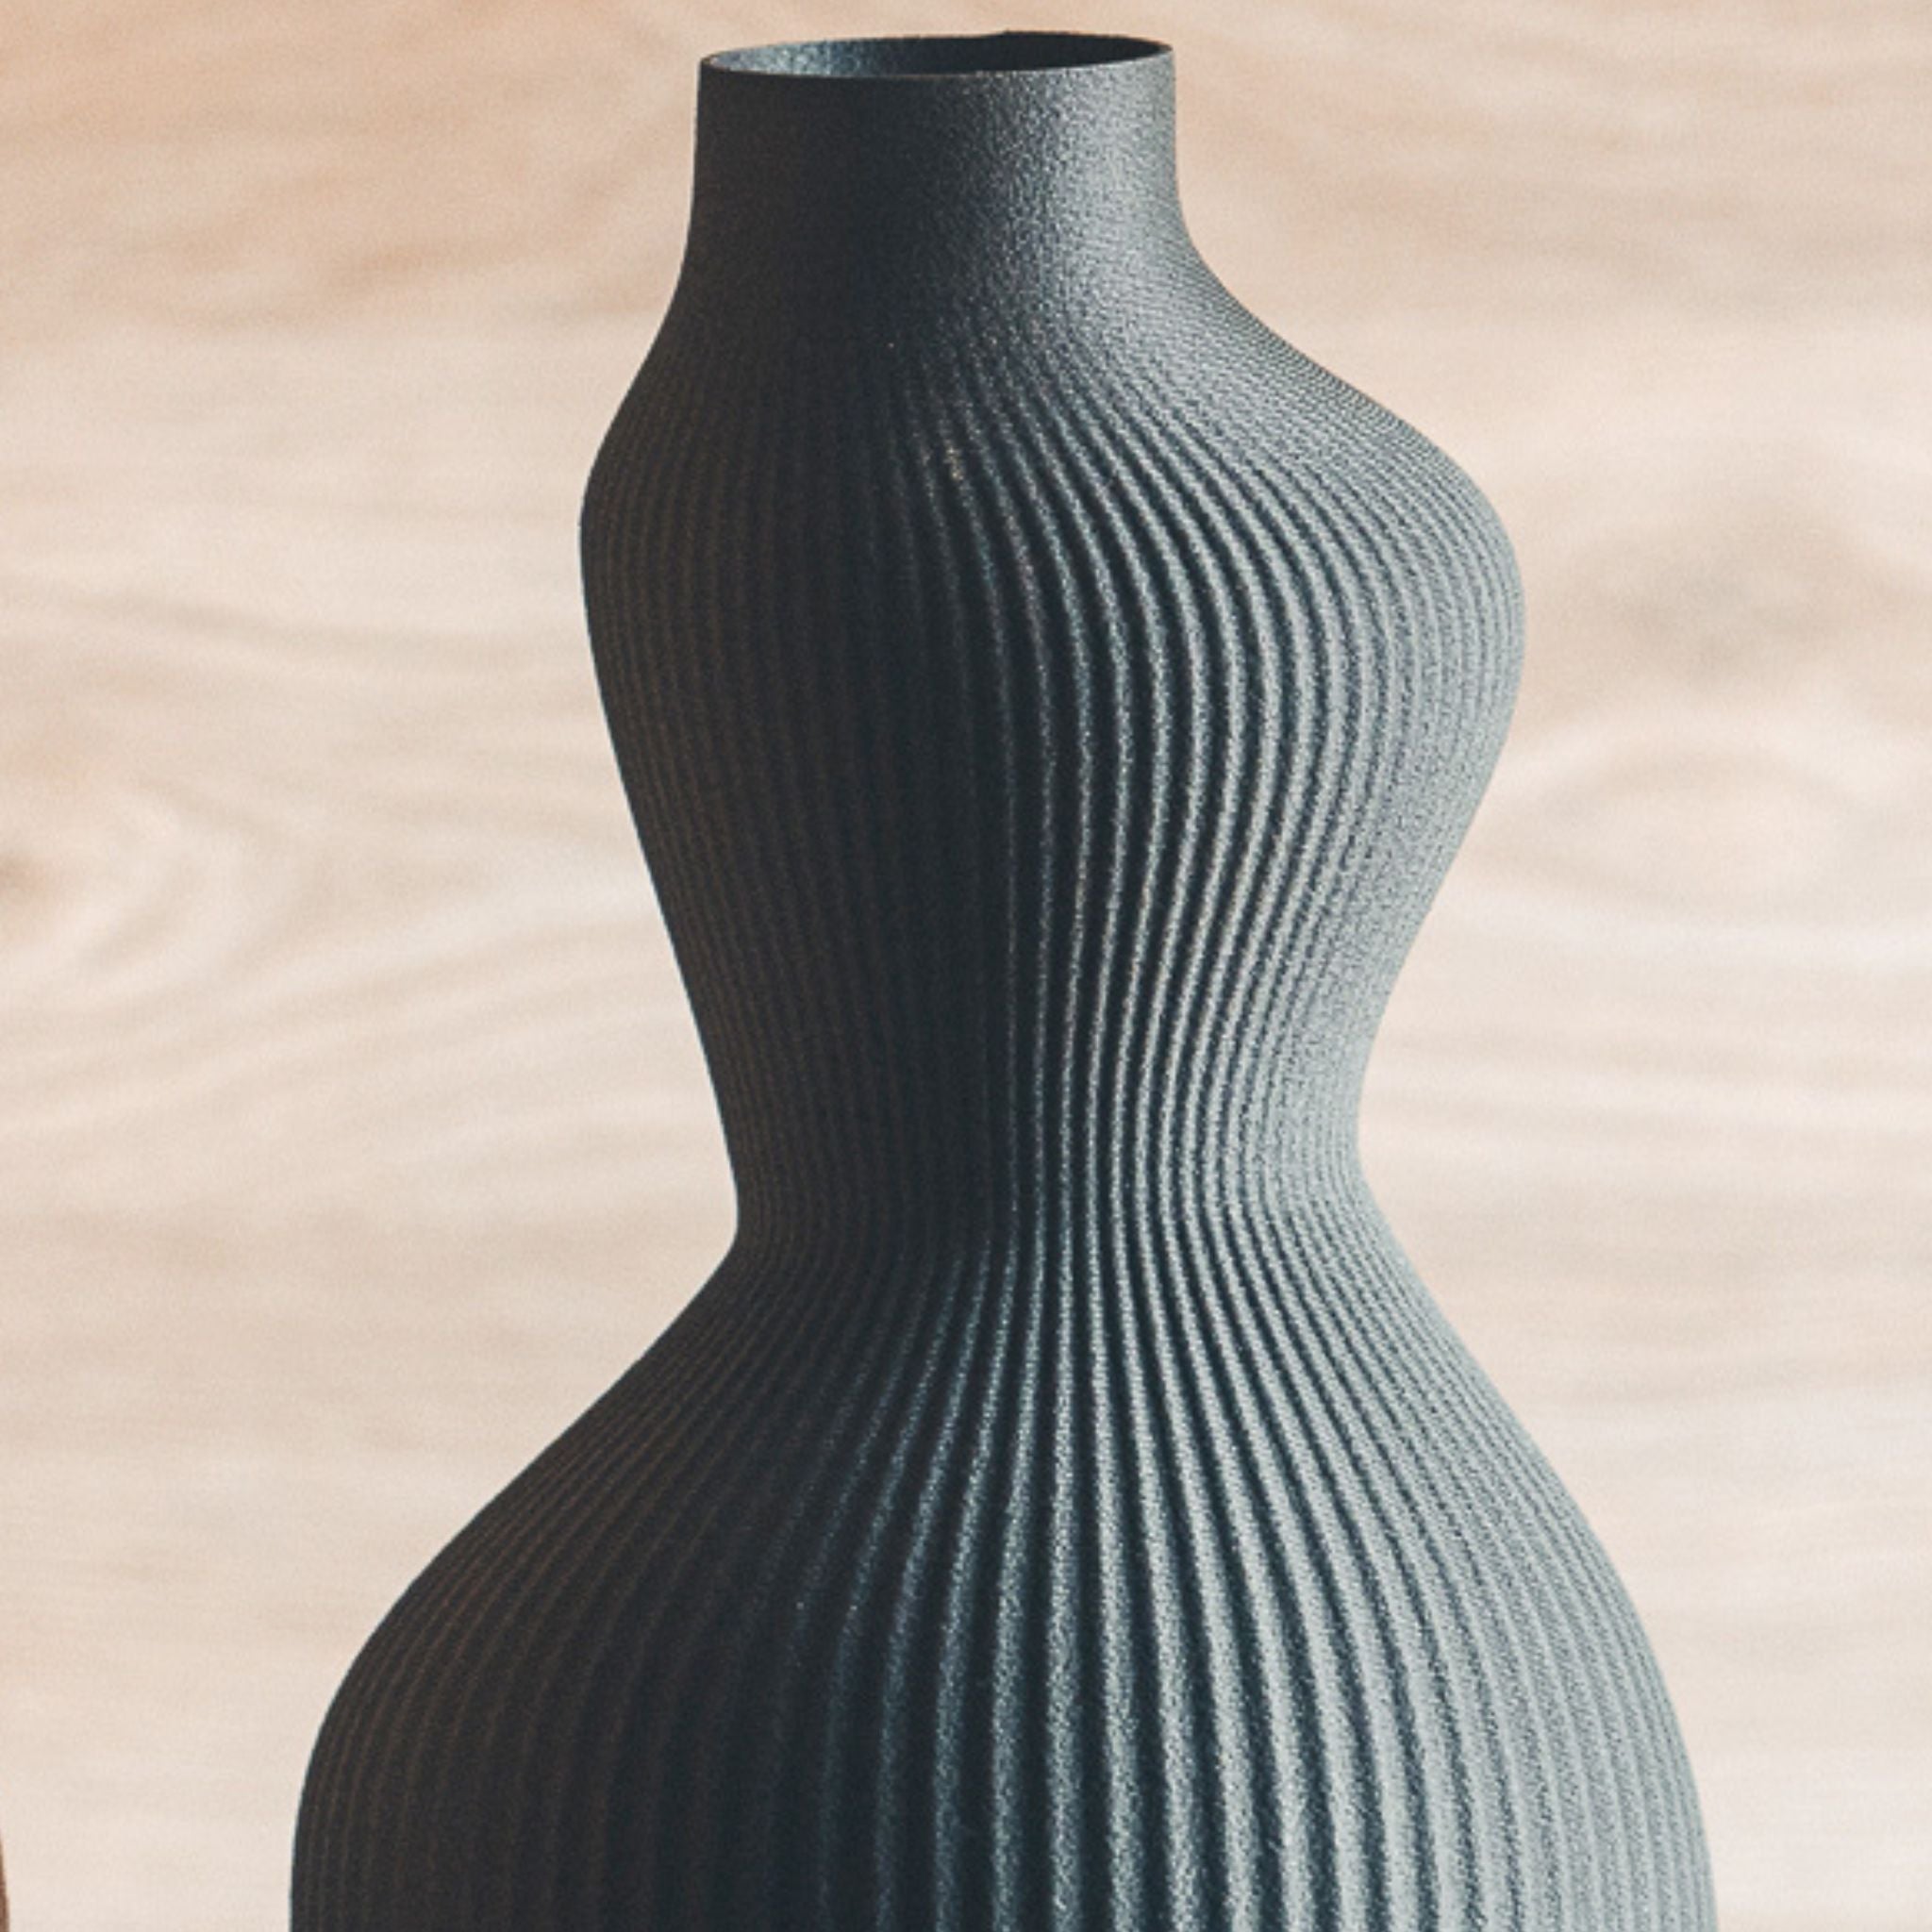 Vase buste femme éco-responsable et made in france